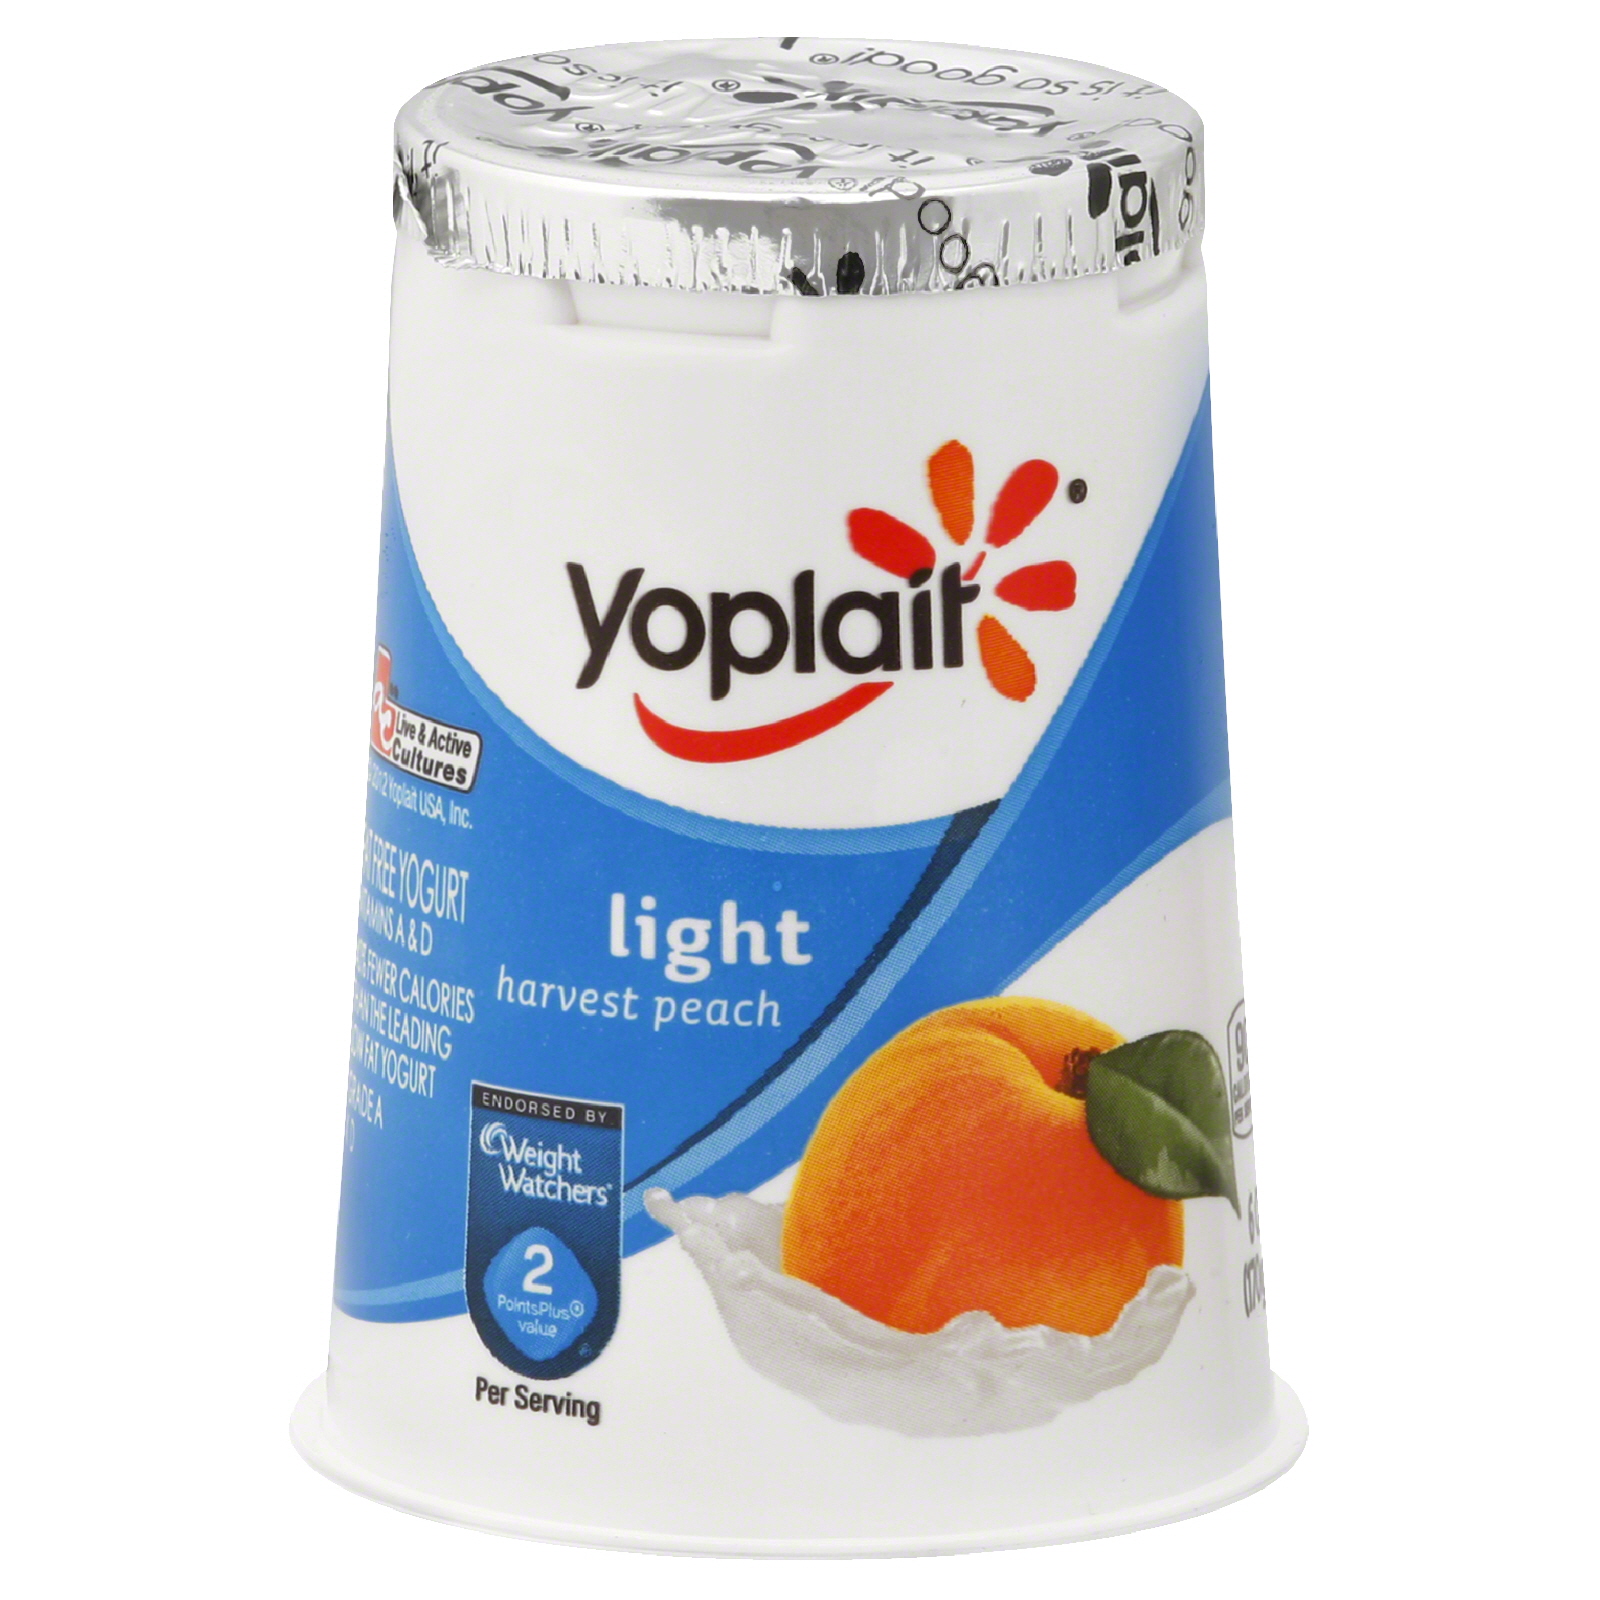 Yoplait Light Yogurt, Fat Free, Harvest Peach, 6 oz (170 g)